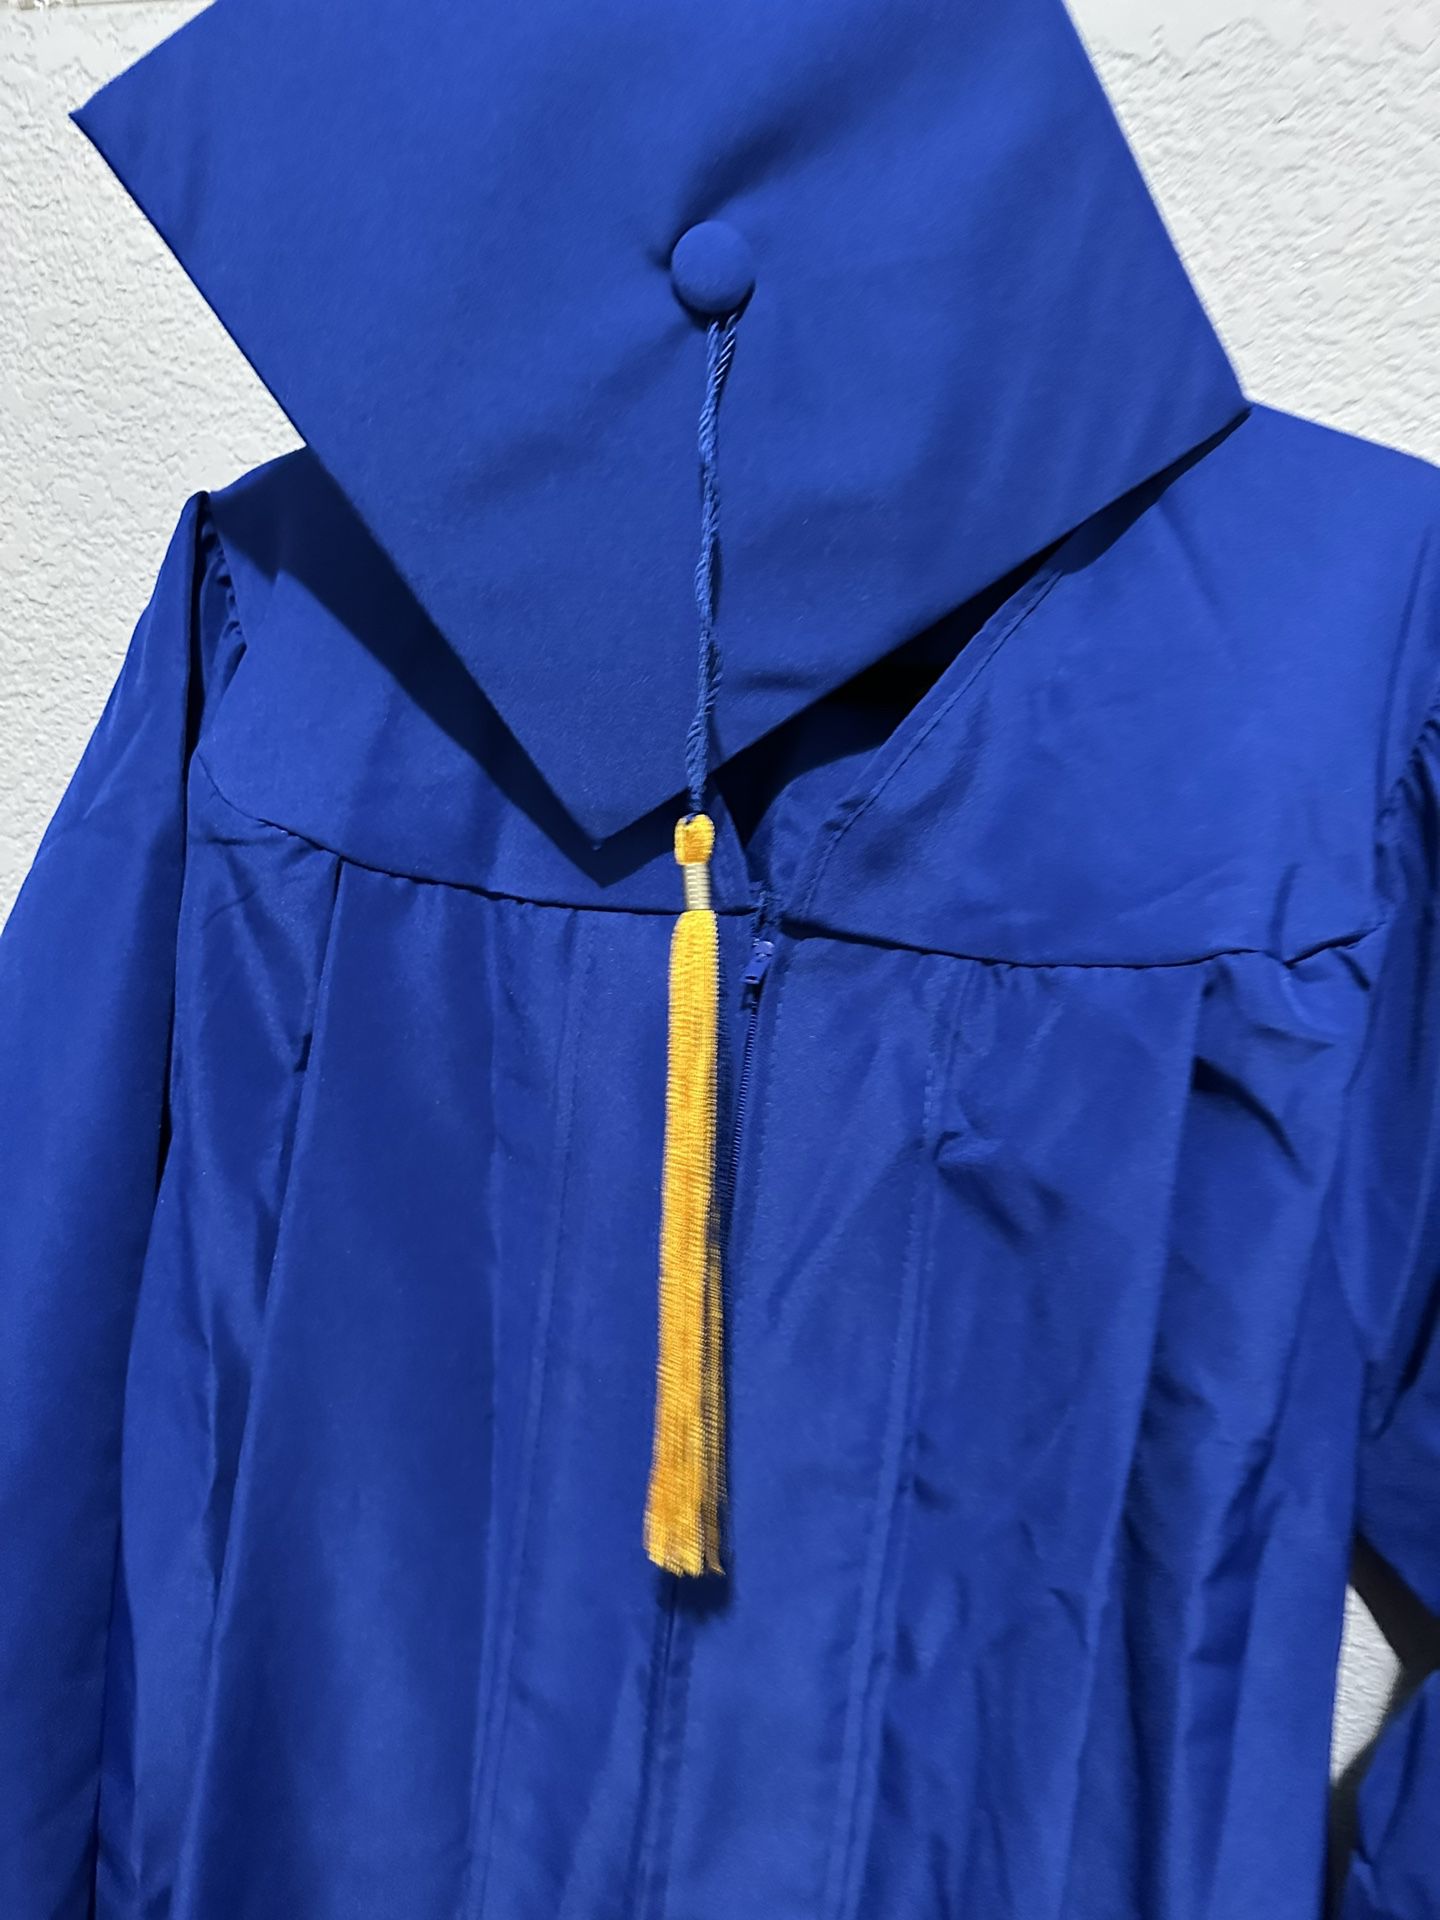 Graduation Gown andCap